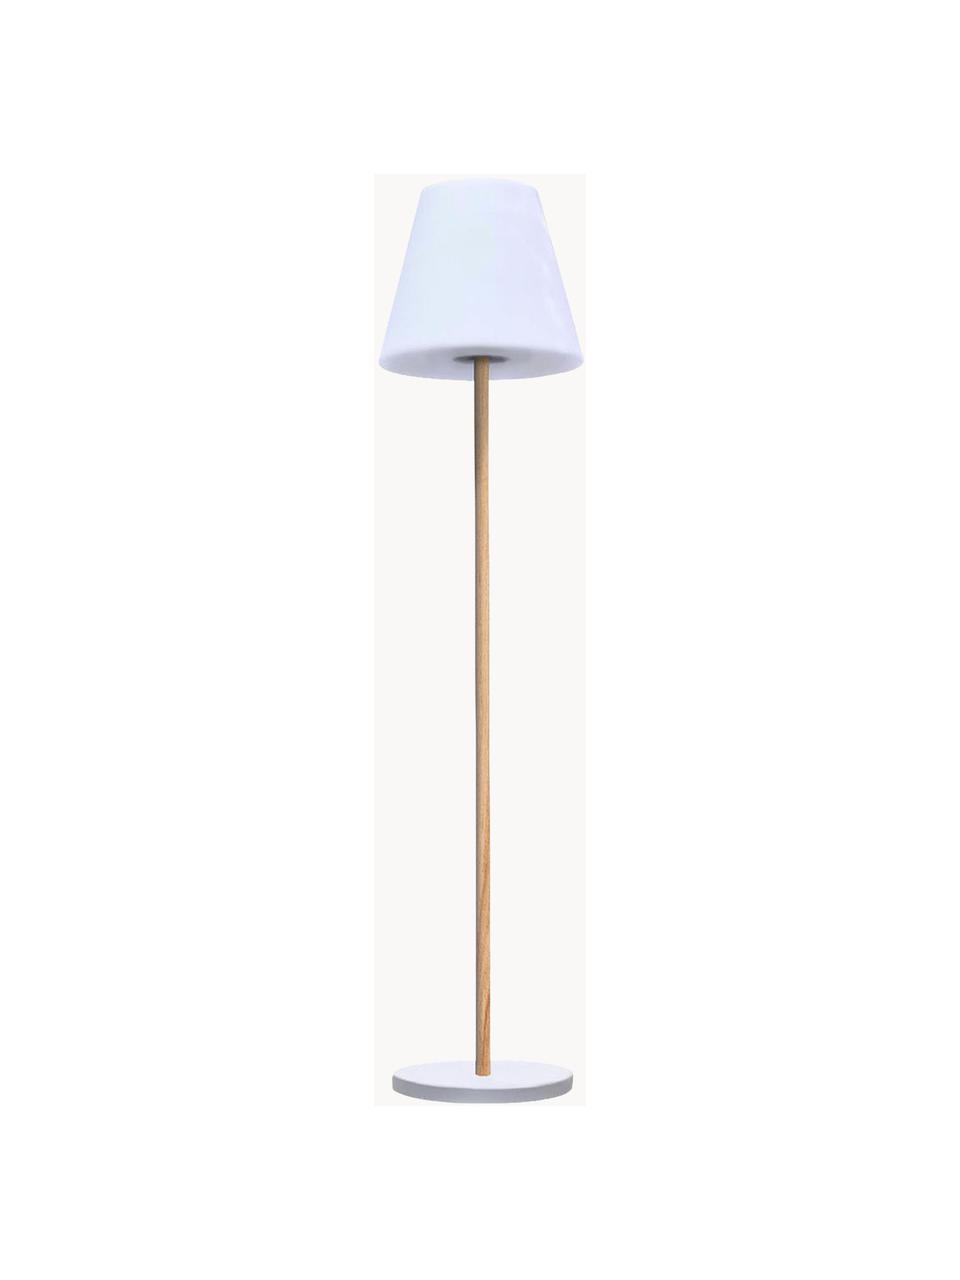 Dimmbare Solar Stehlampe Standby mit Holzfuß, Lampenschirm: Polyethylen, Lampenfuß: Holz, Weiß, Helles Holz, Ø 34 x H 150 cm